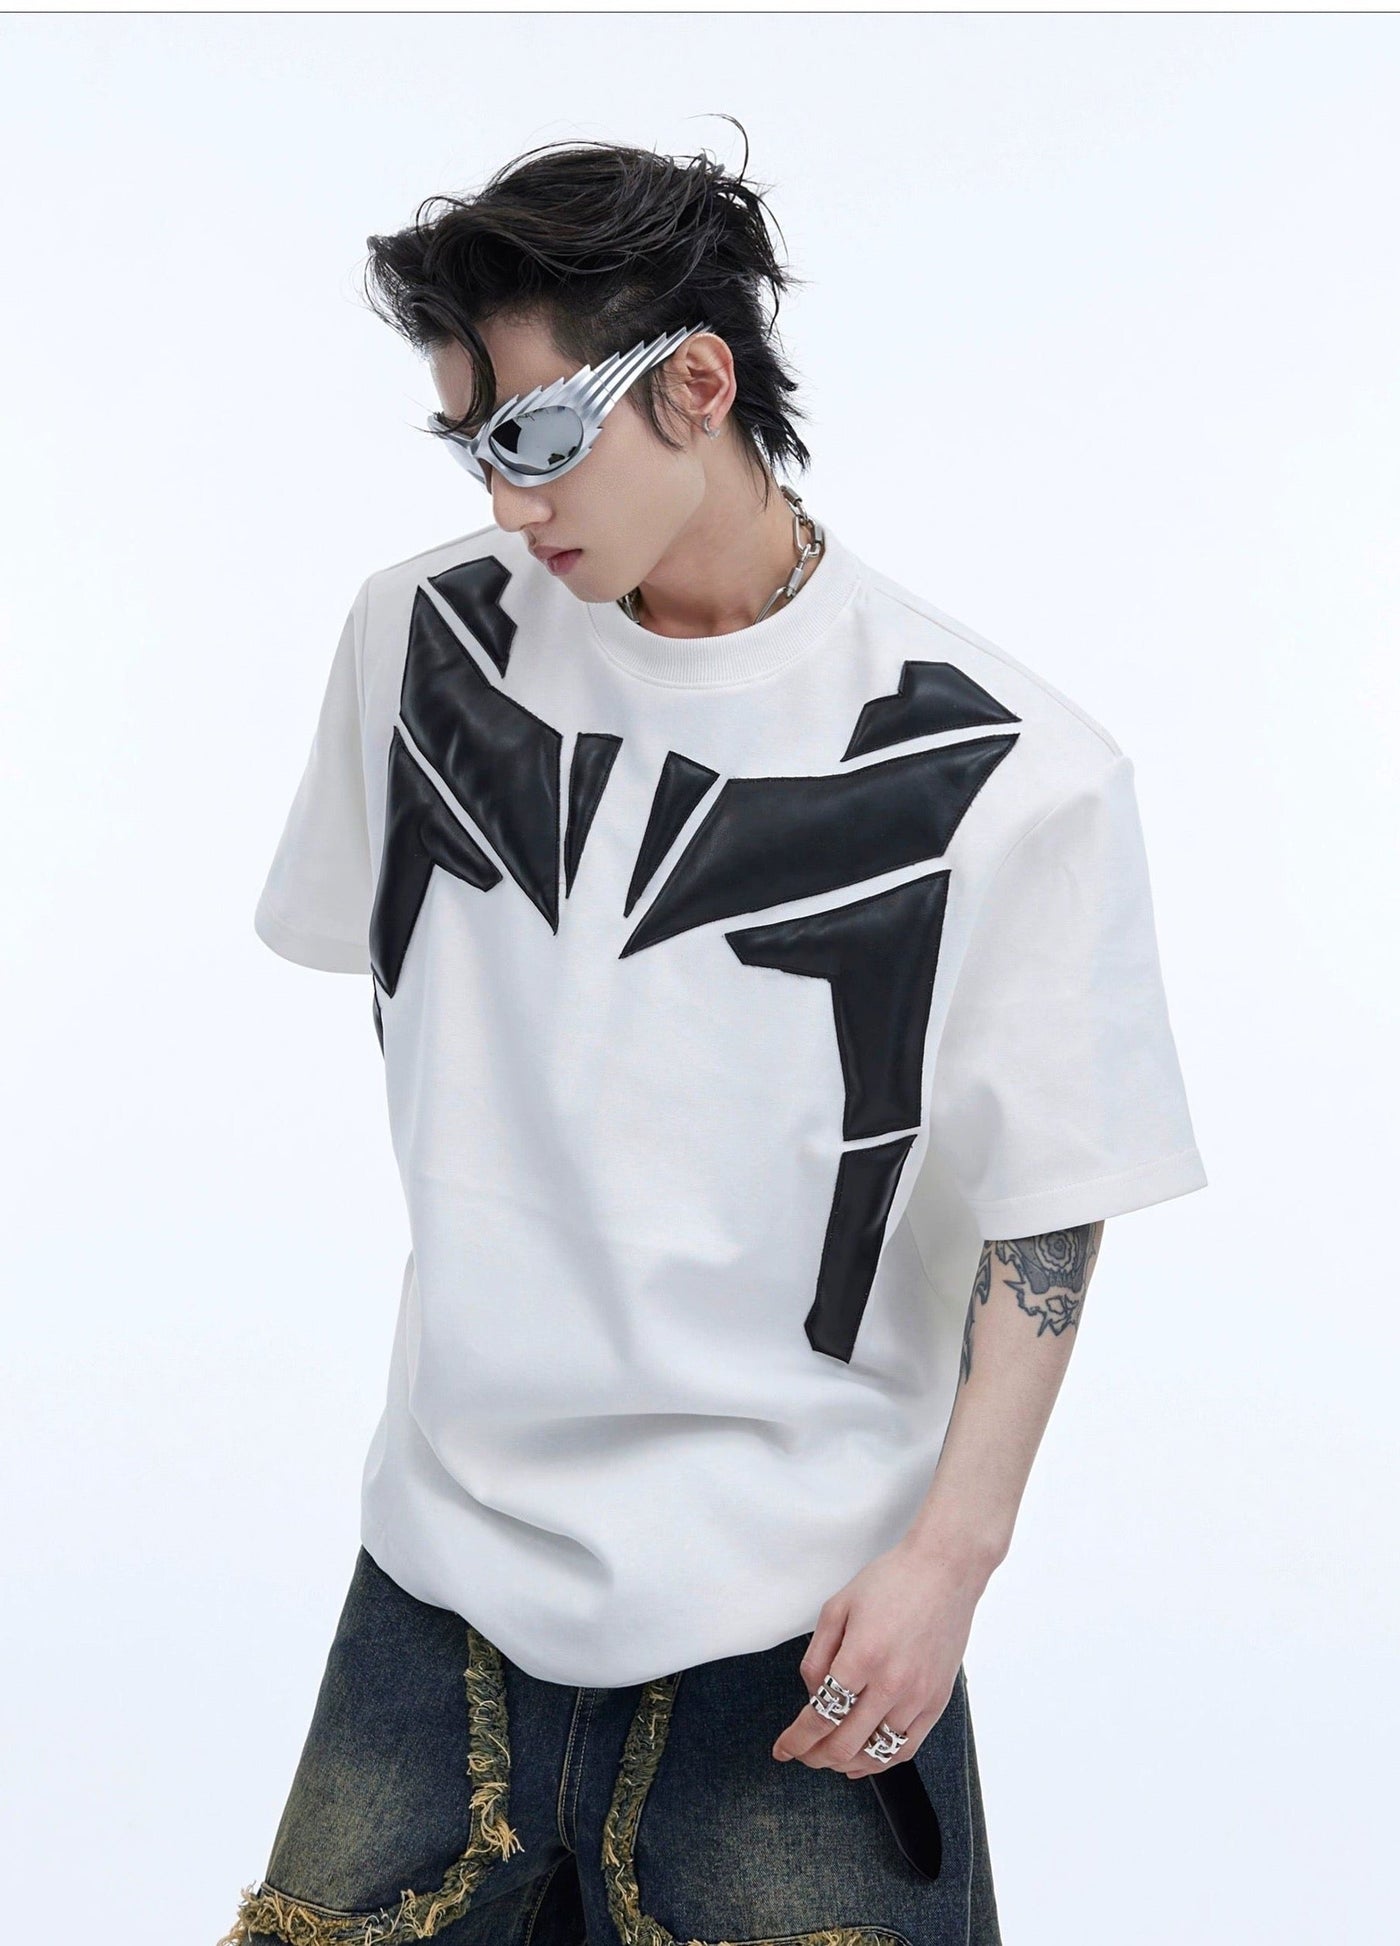 Leather Blocks T-Shirt Korean Street Fashion T-Shirt By Argue Culture Shop Online at OH Vault